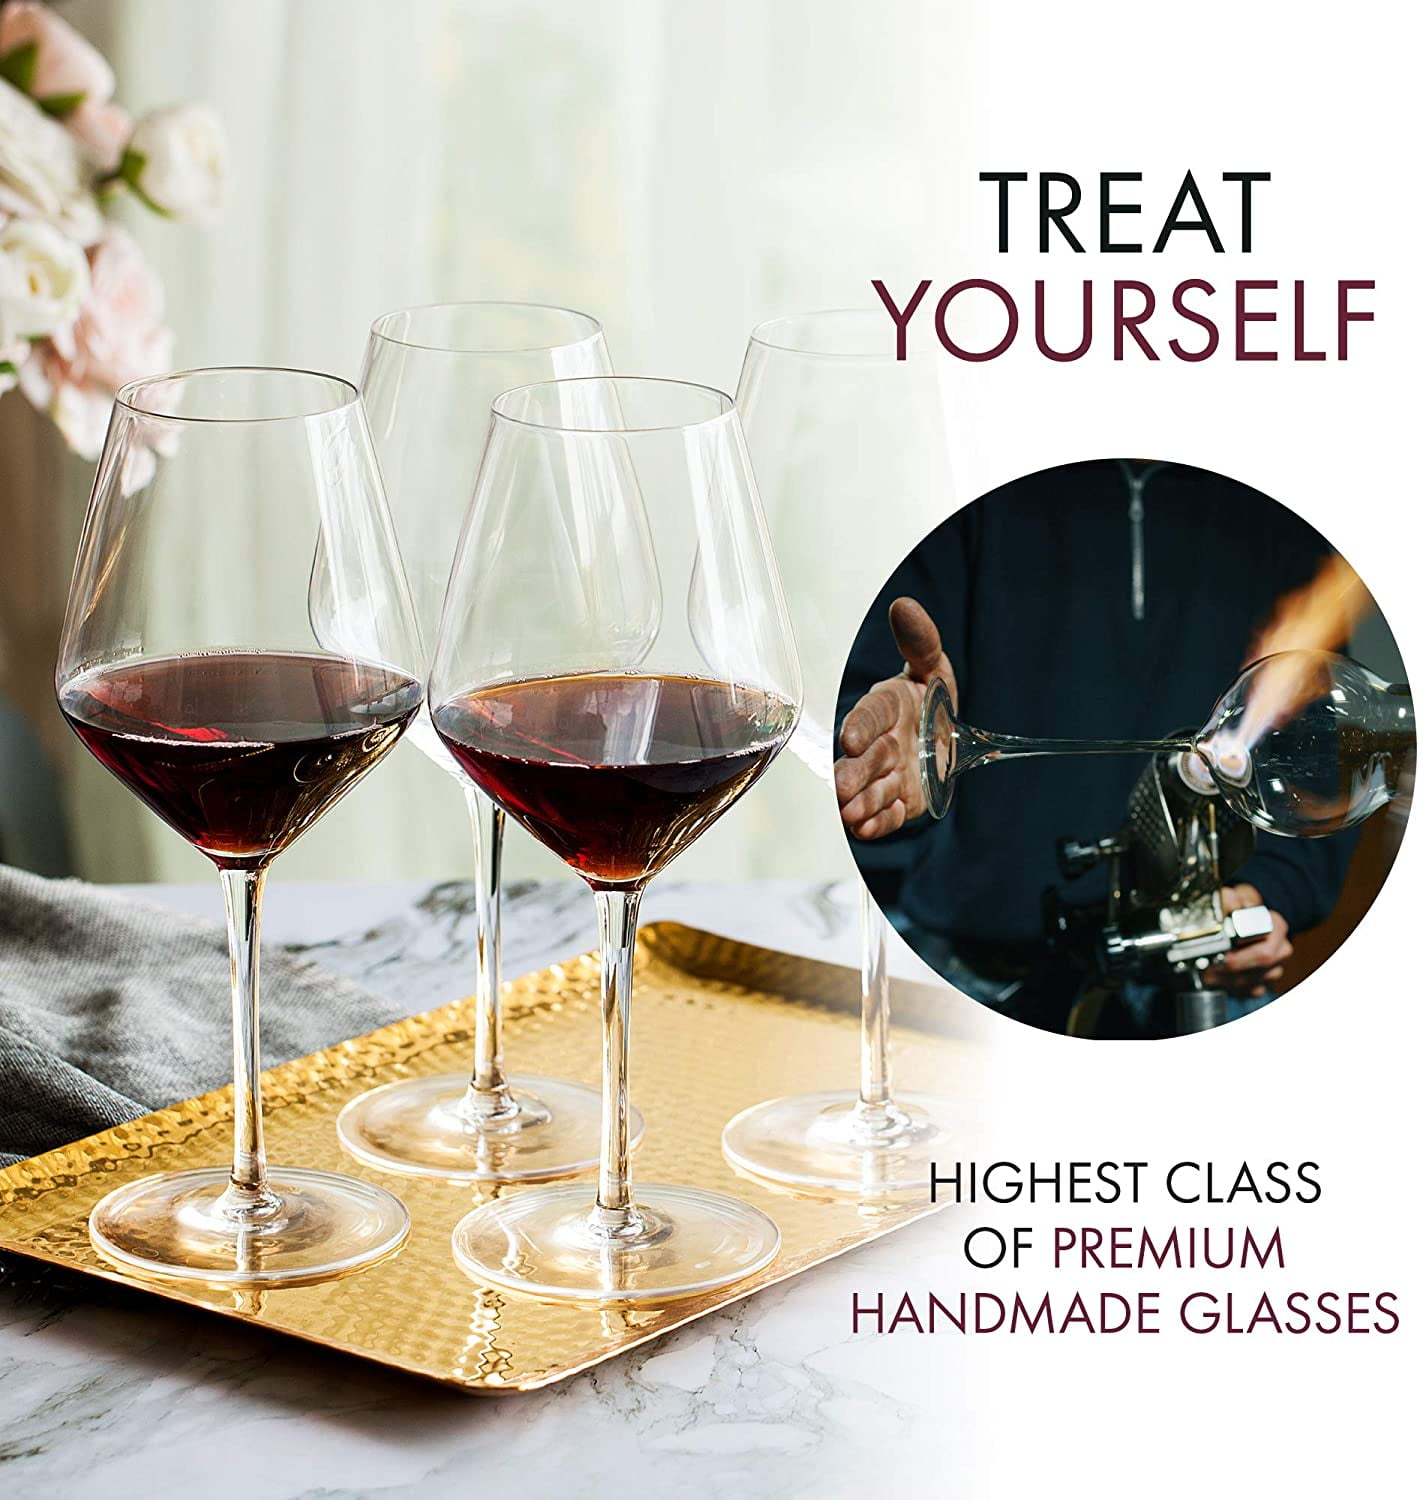 Elixir Glassware Red Wine Glasses - Set of 4 Hand Blown Large Wine